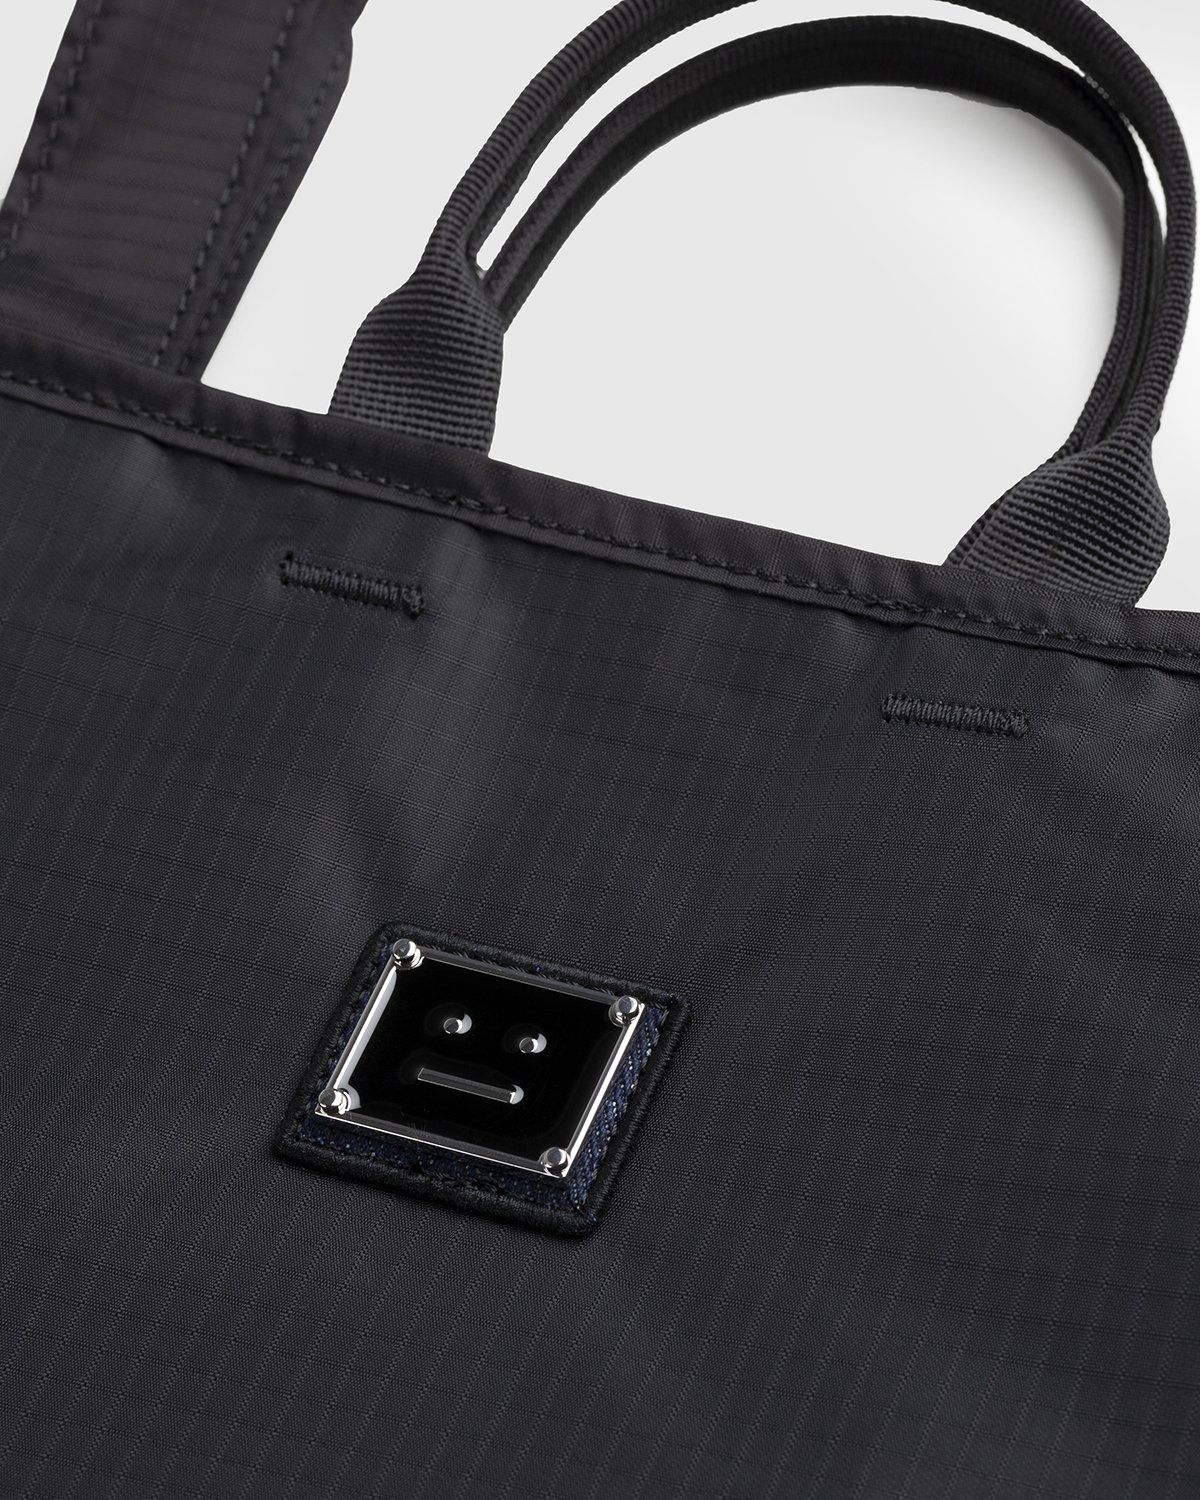 Acne Studios - Shoulder Tote Bag Black - Accessories - Black - Image 4